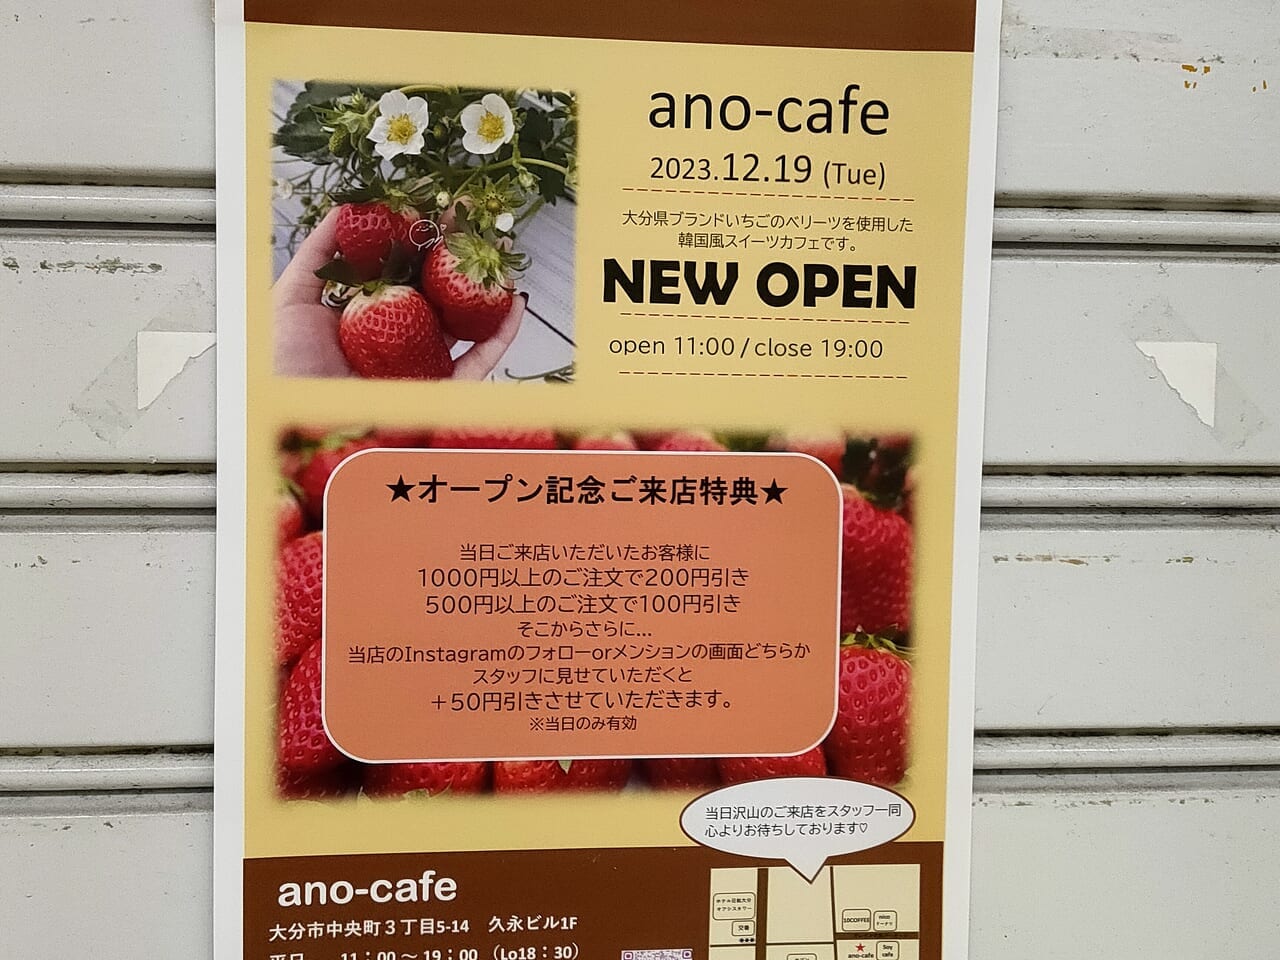 中央町「ano-cafe」